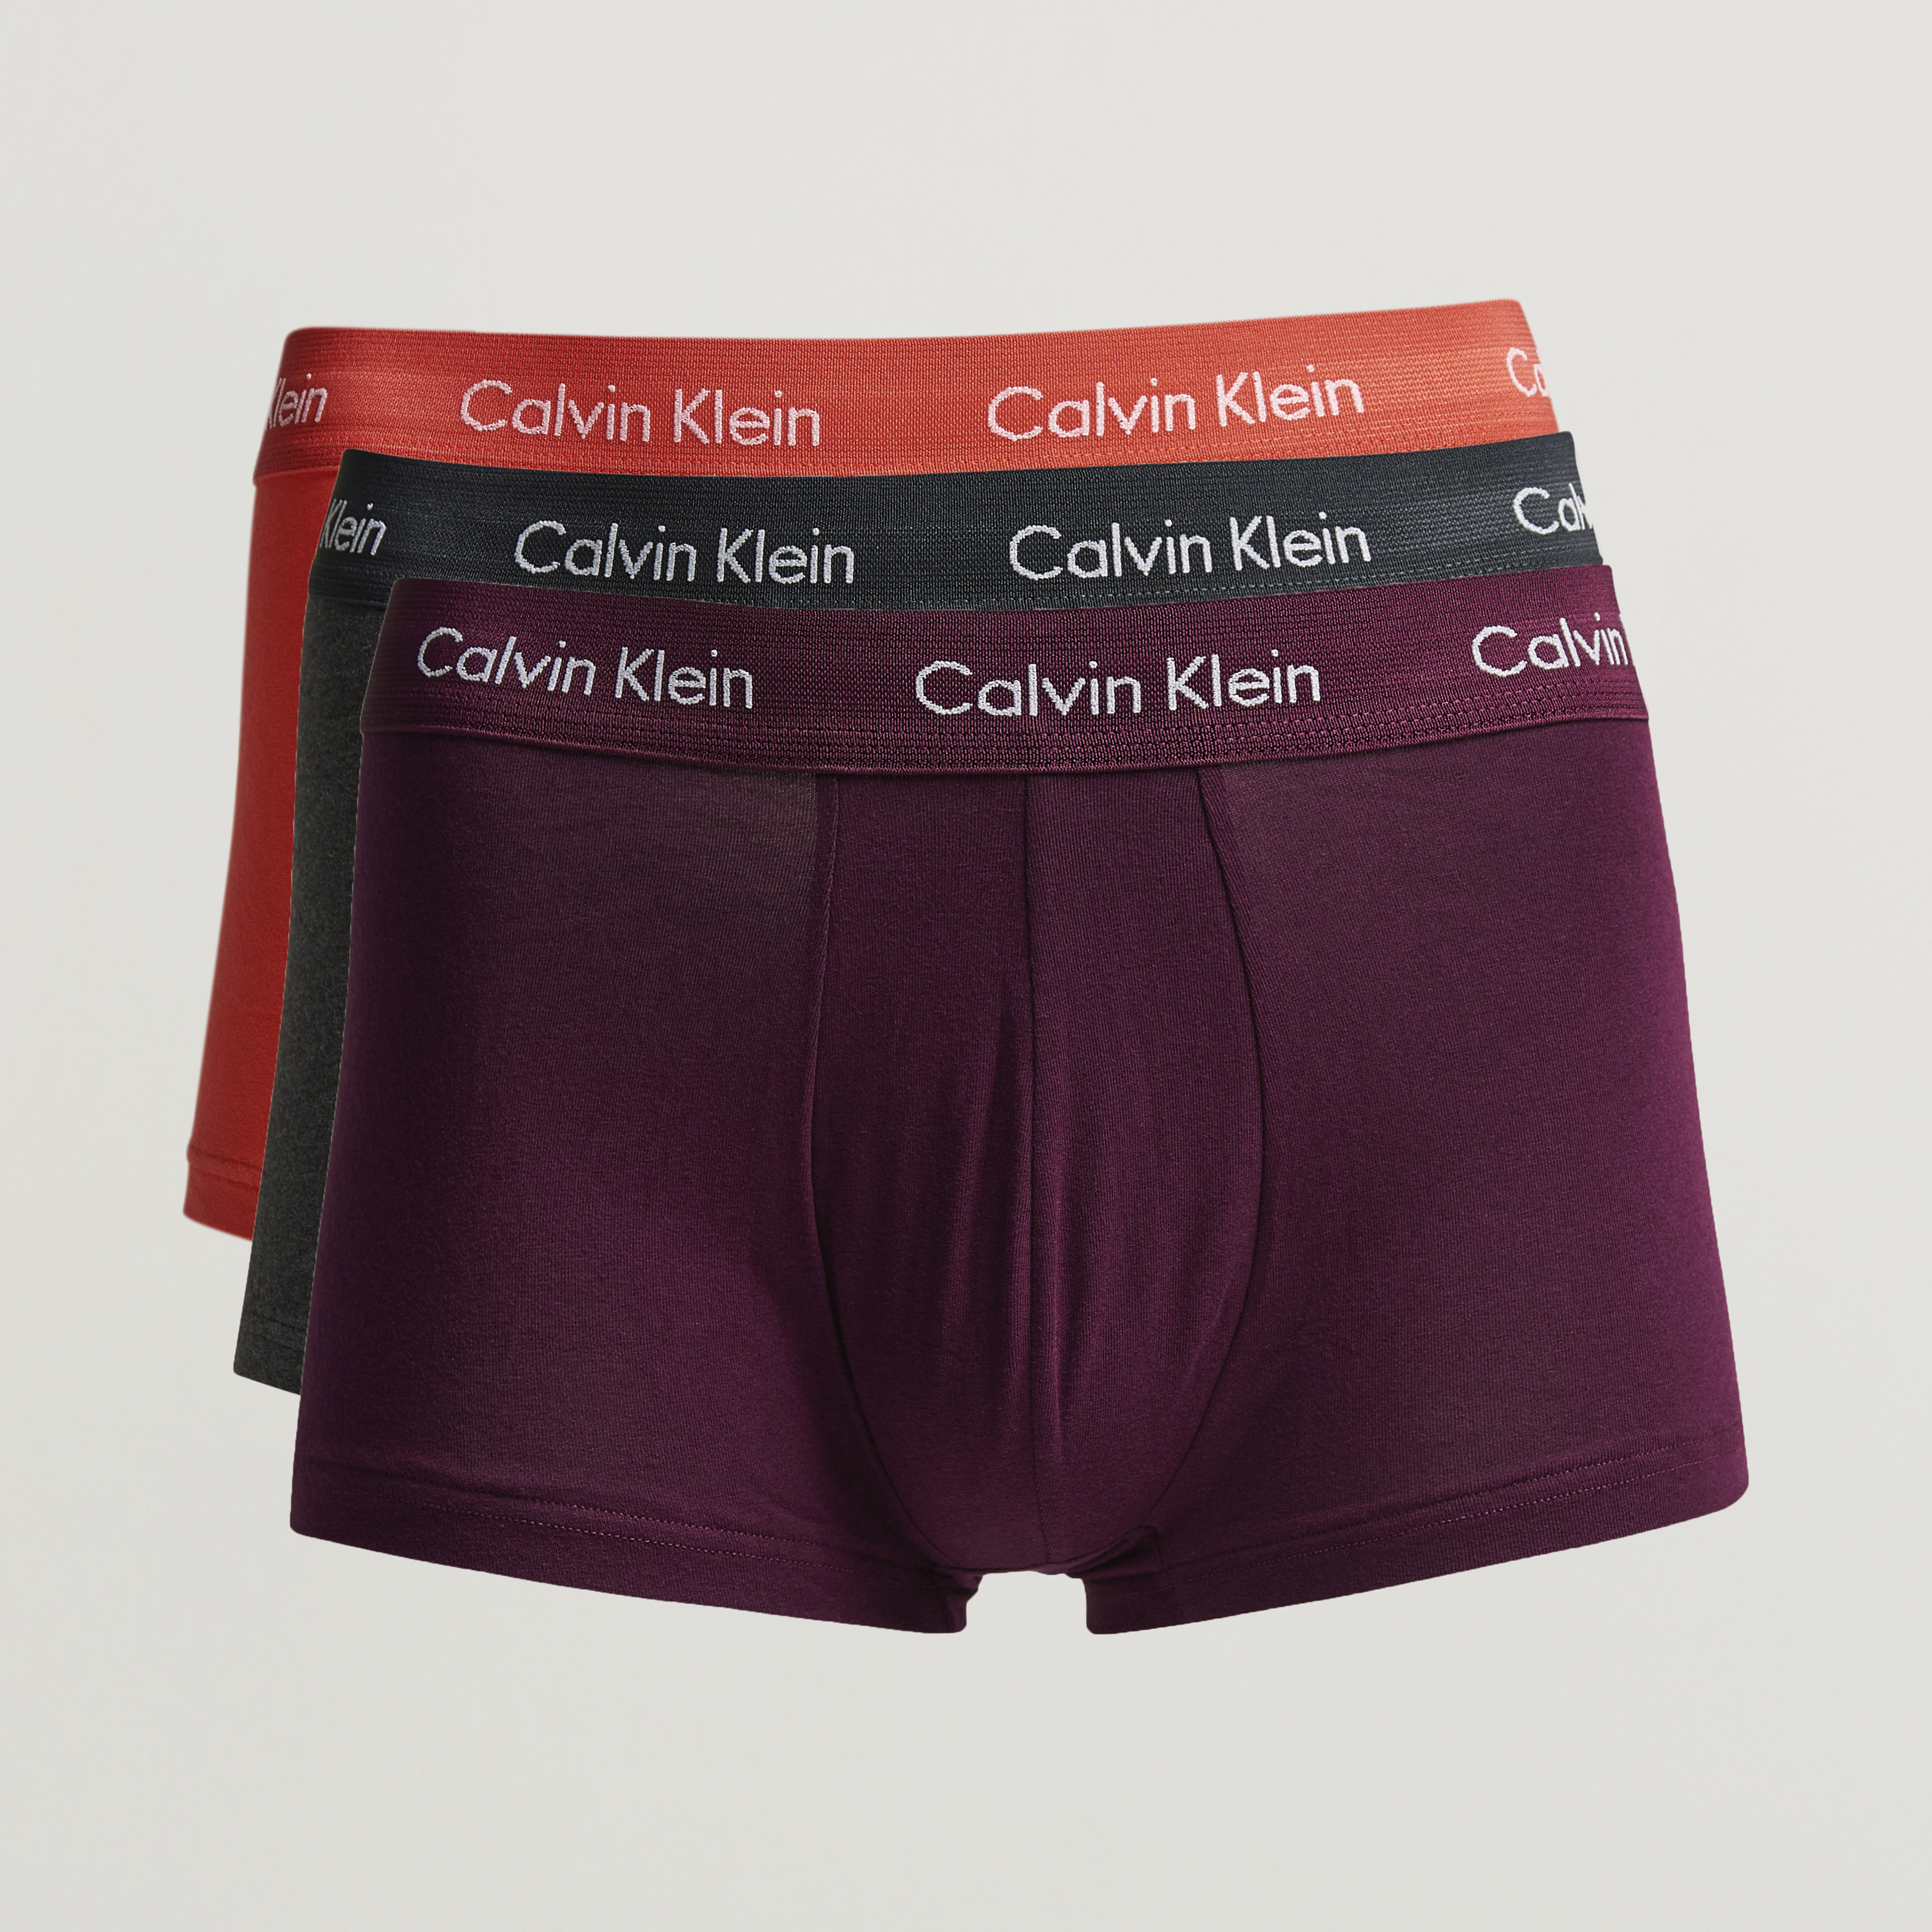 Calvin Klein Underwear LOW RISE TRUNK 3 PACK - Pants - rhone/charcoal/orange/grey  - Zalando.de